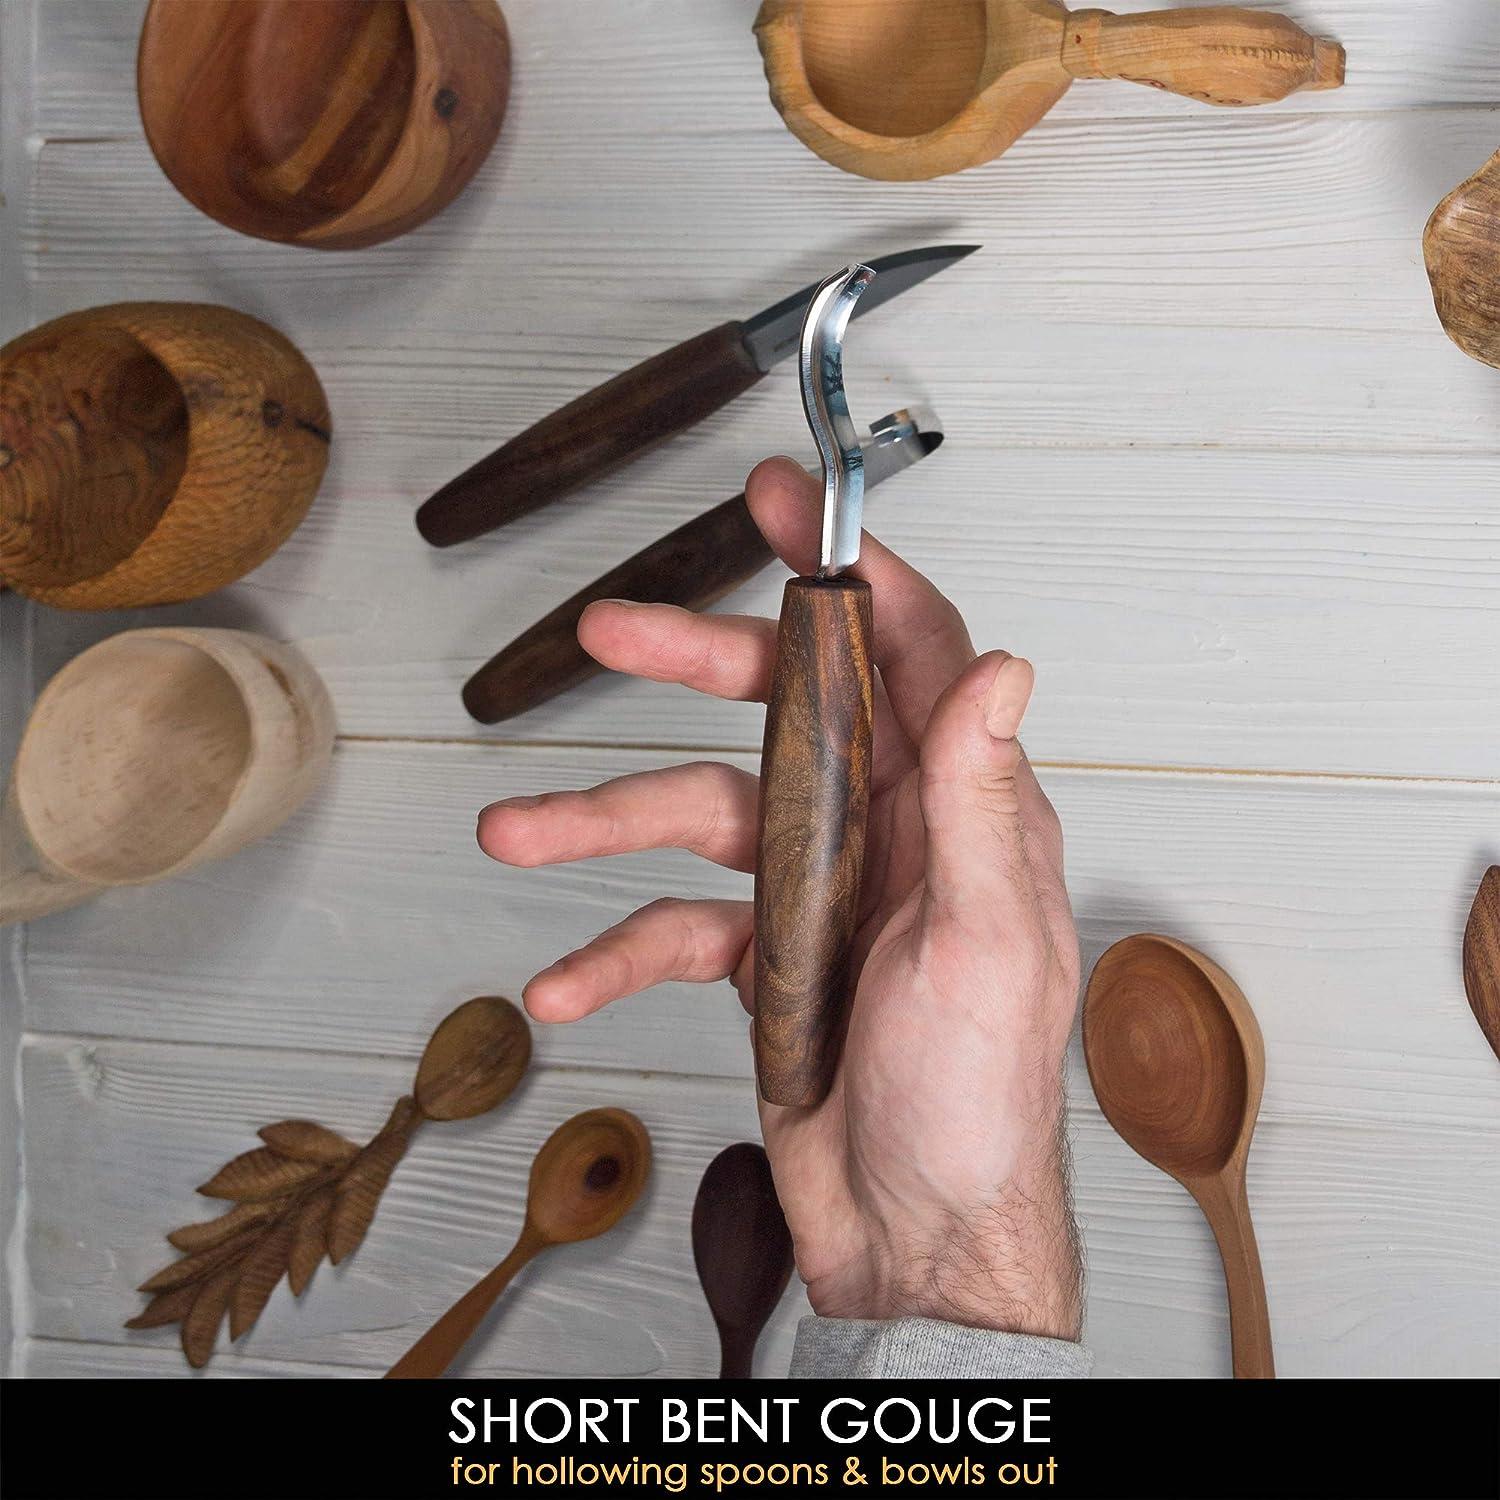 BeaverCraft Wood Spoon Carving Tools Kit S14x Deluxe - Spoon Carving Knives  Hook Knife Wood Carving Spoon Knife Set Bowl Kuksa Whittling Carving Gouges  Kit Deluxe S14x